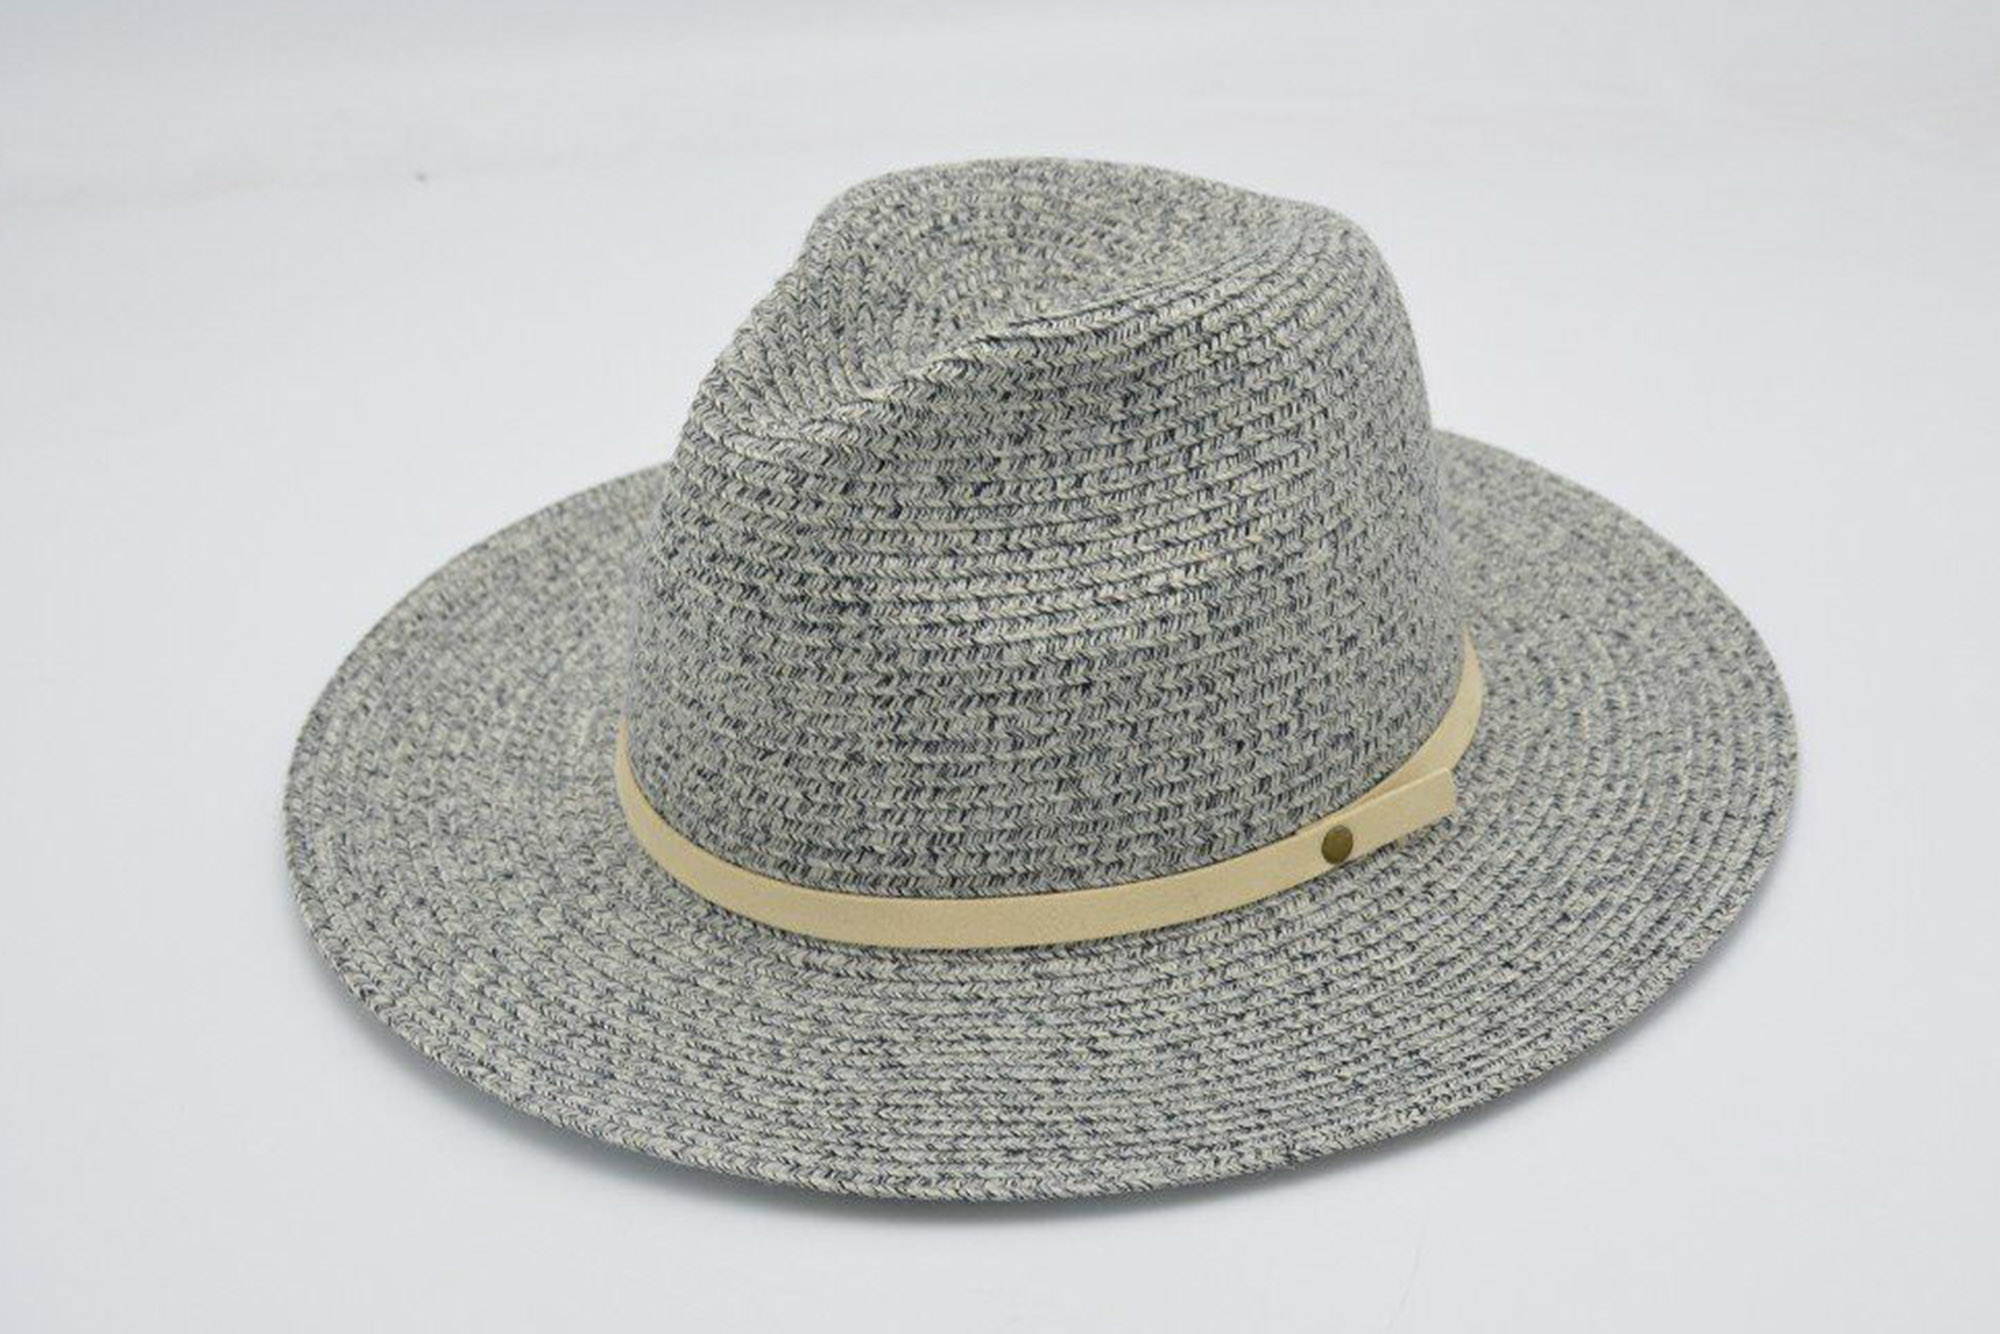 Packable Widd Brim Panama Hats